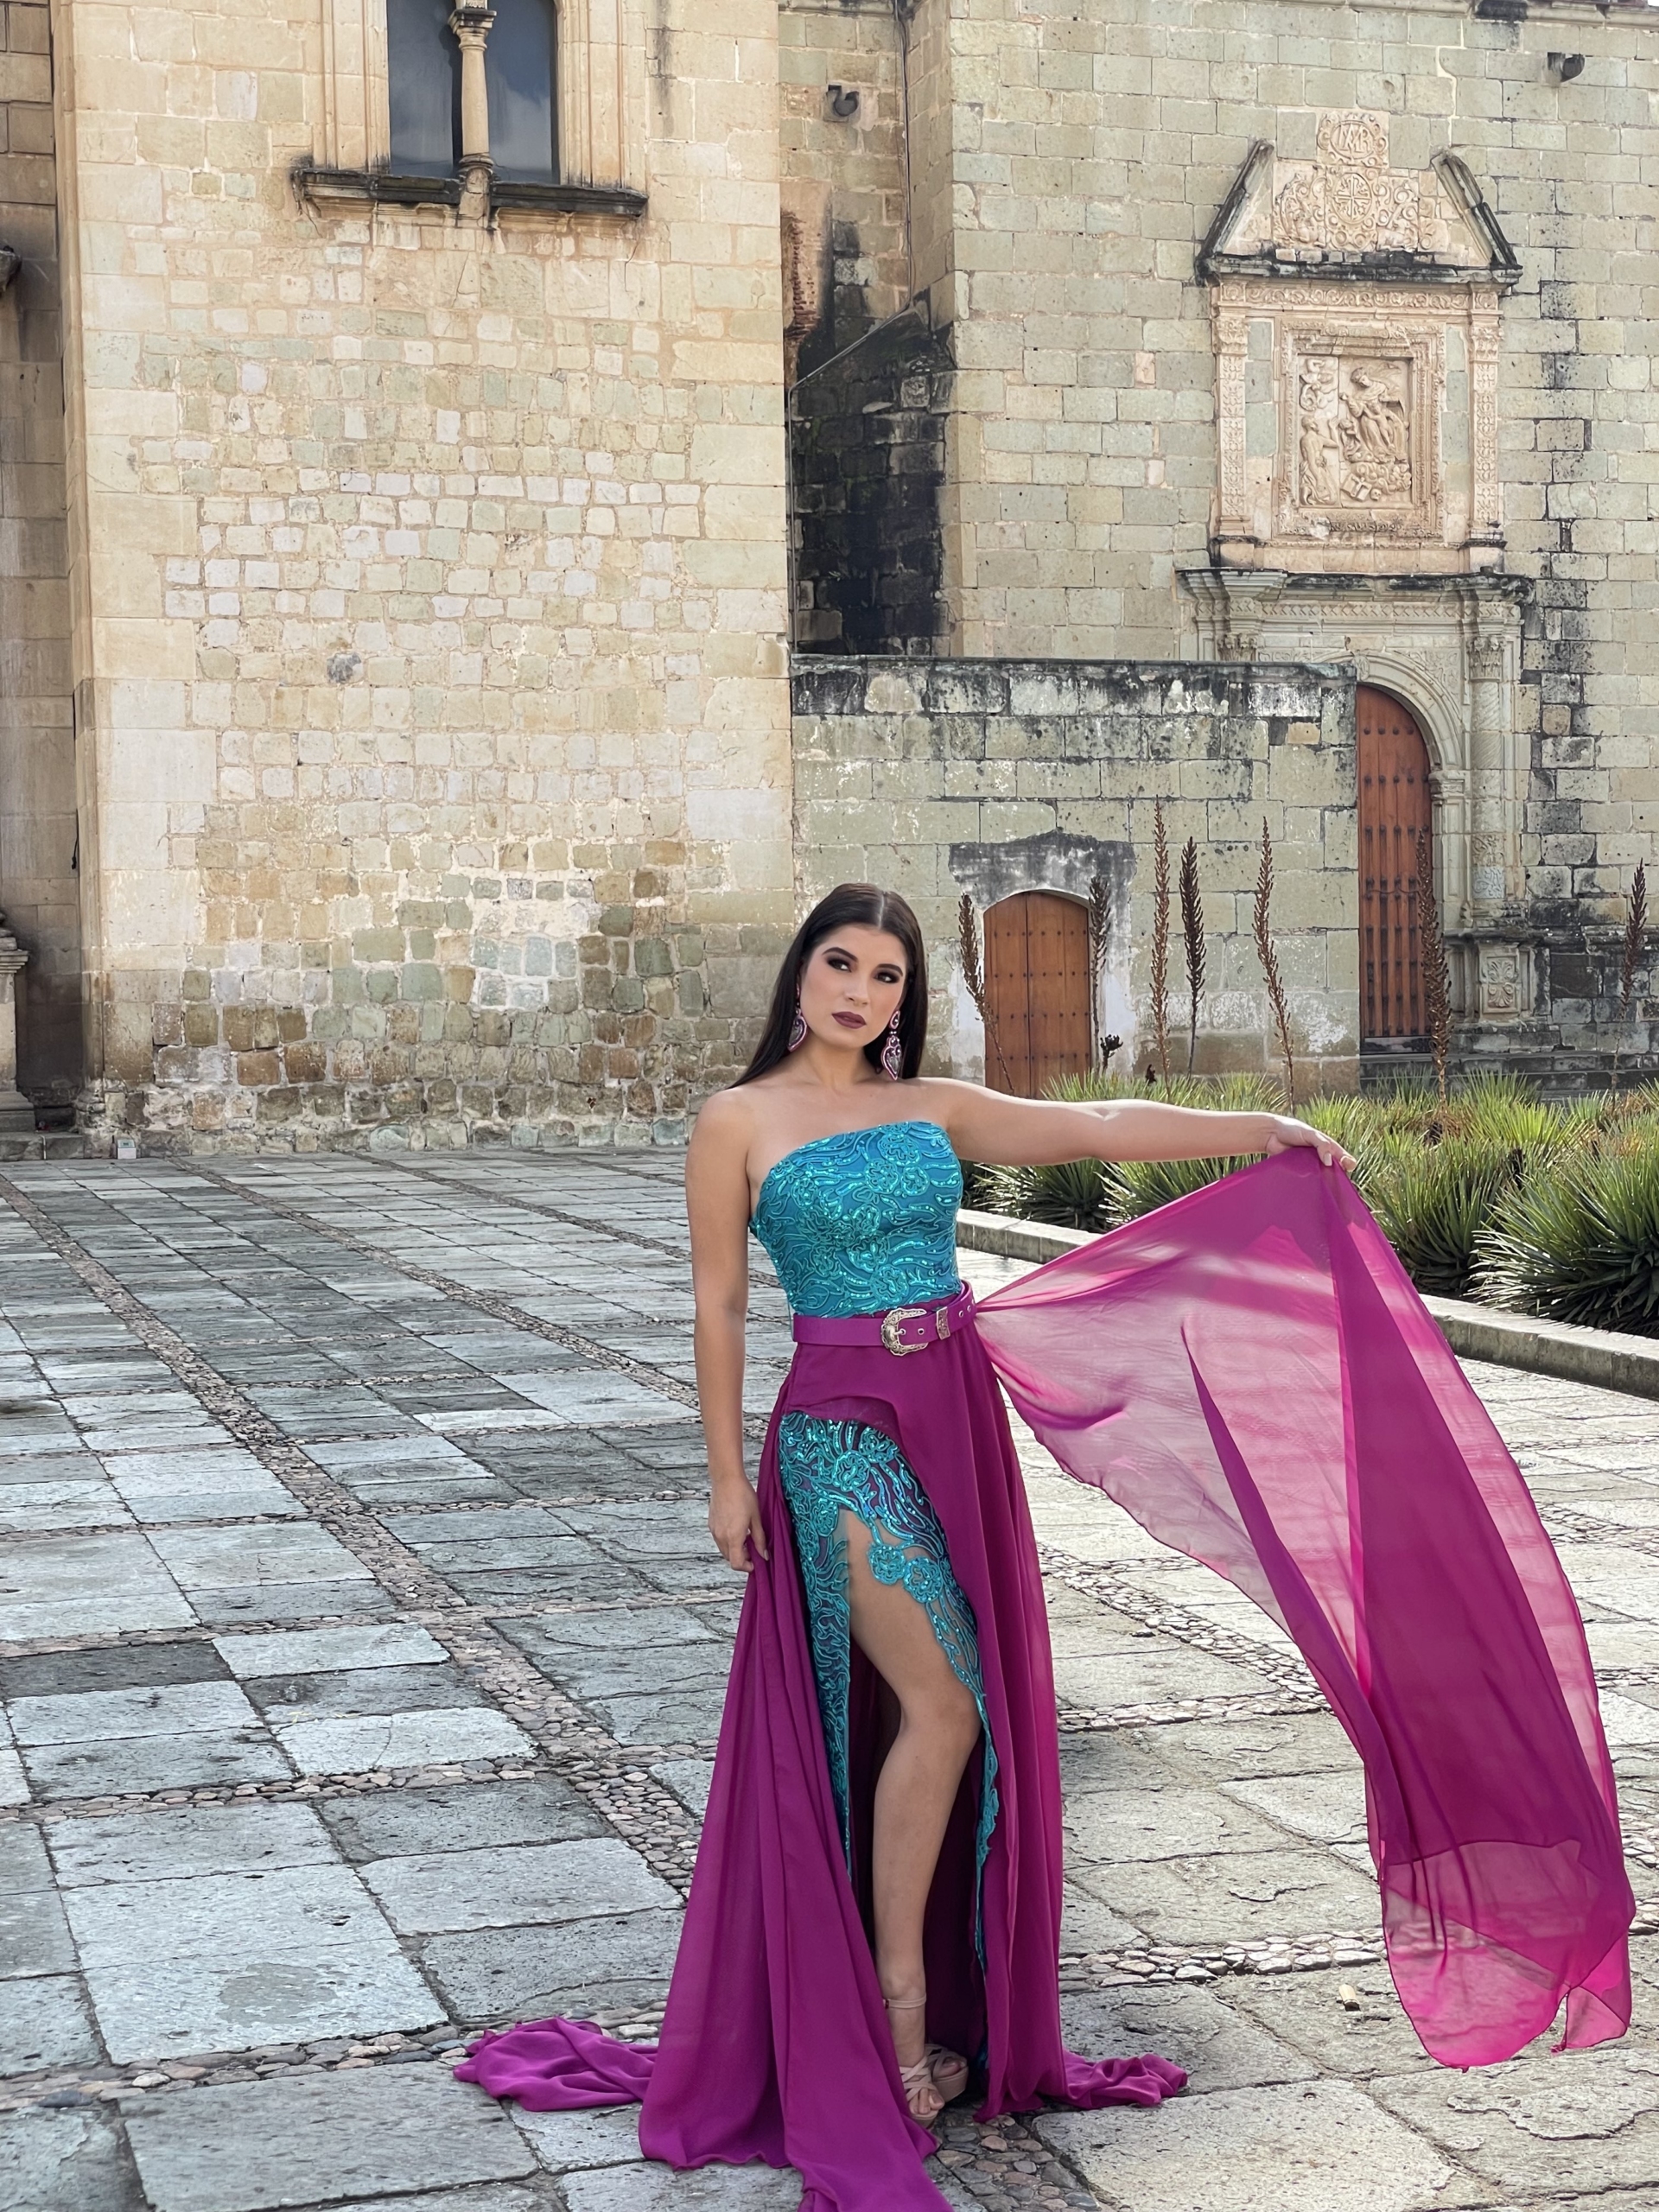 fashion model in the centro of oaxaca mexico wearing ballgown